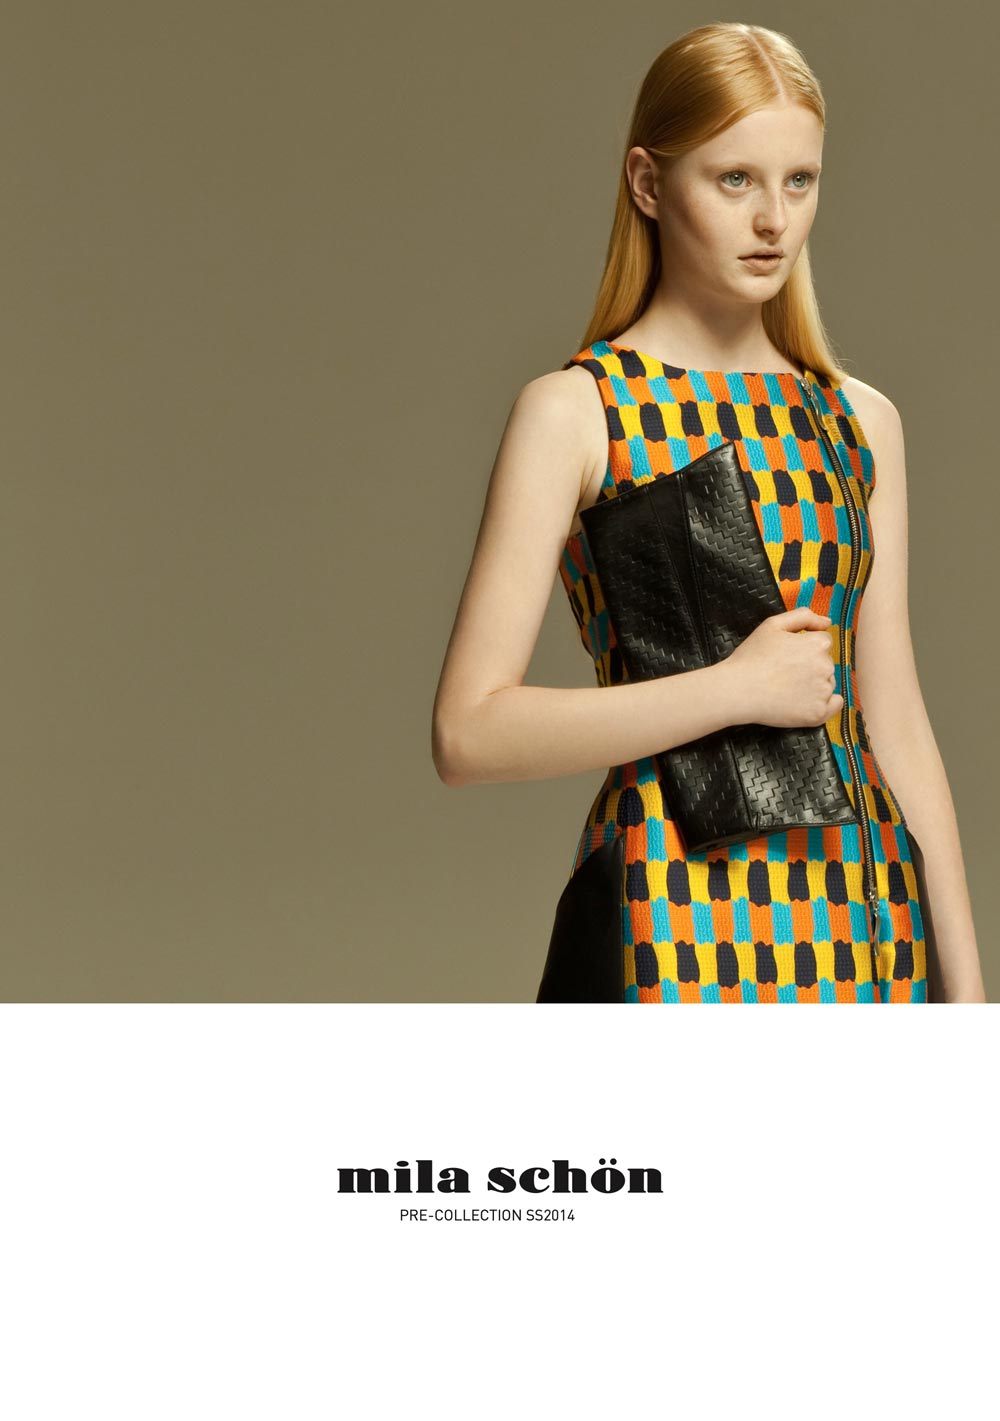 Mila Schön pre-collection lookbook